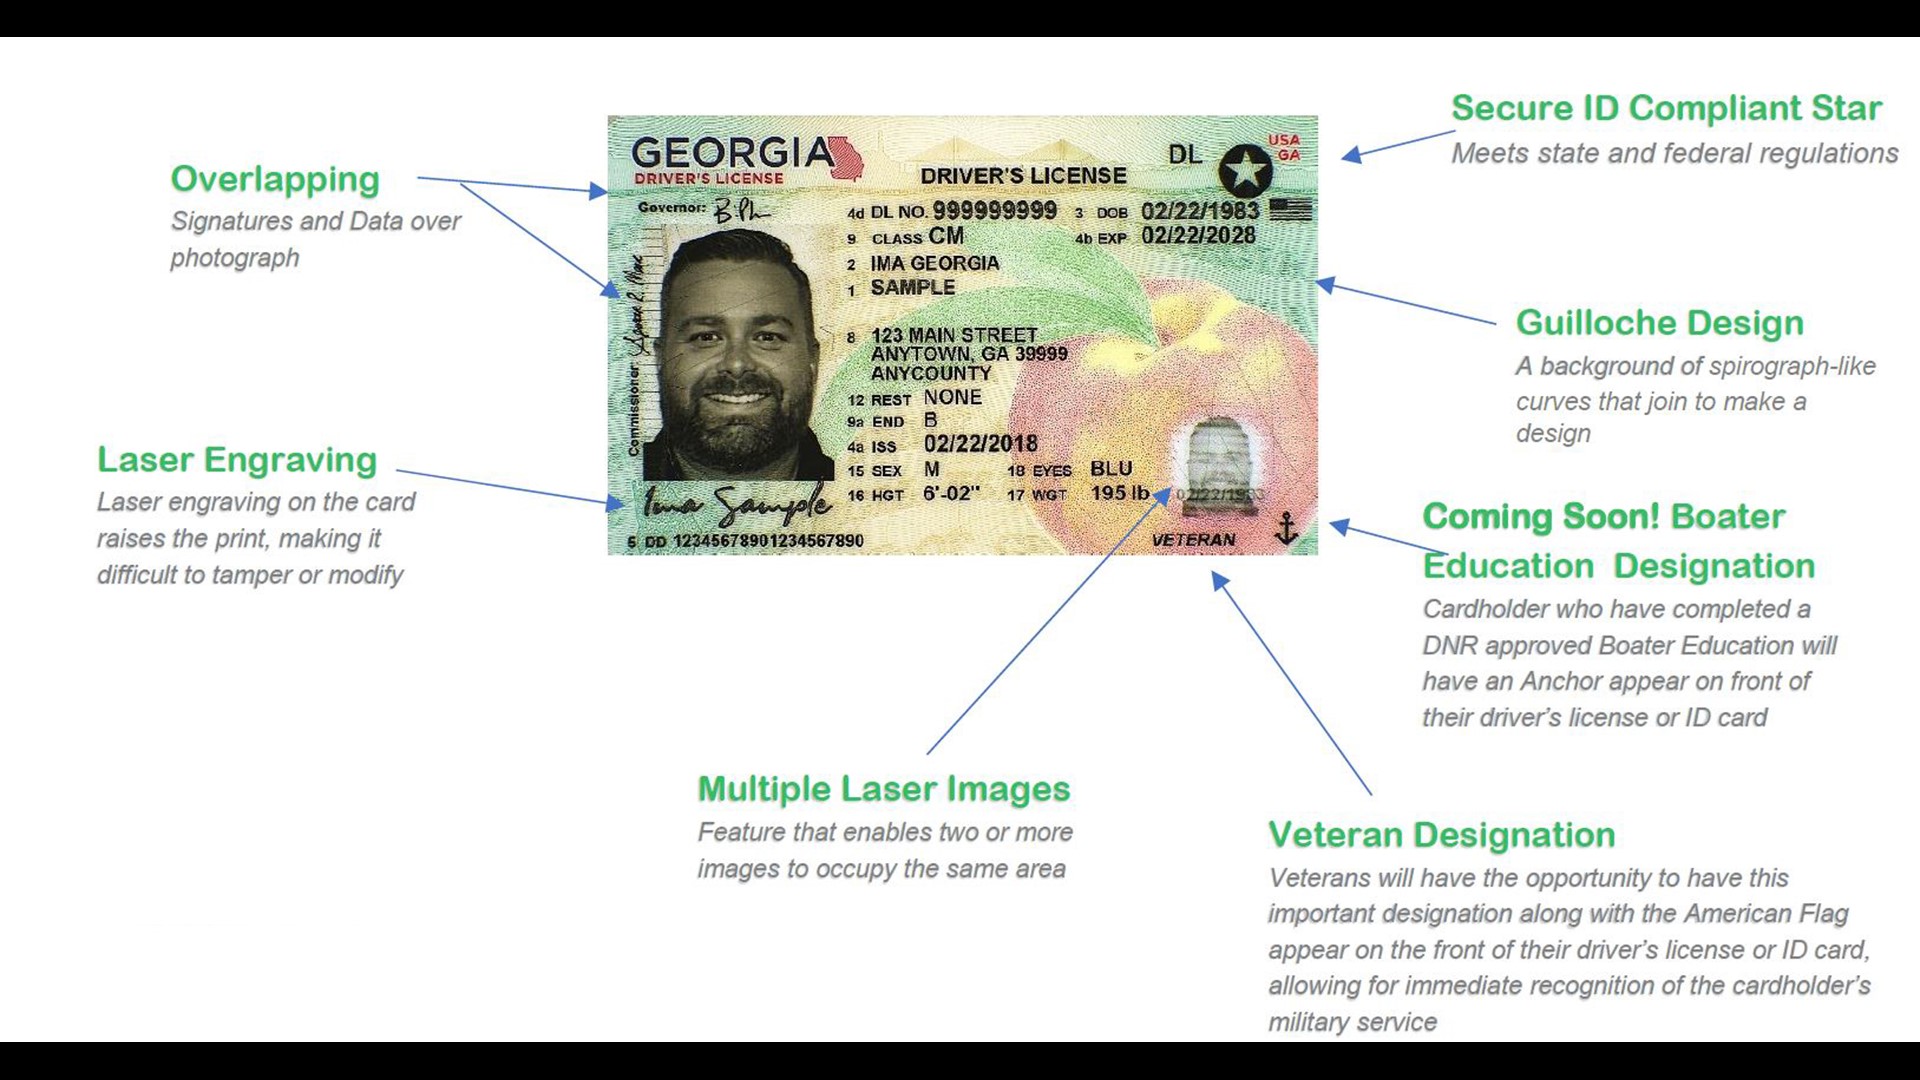 driver license usa ga maker online free